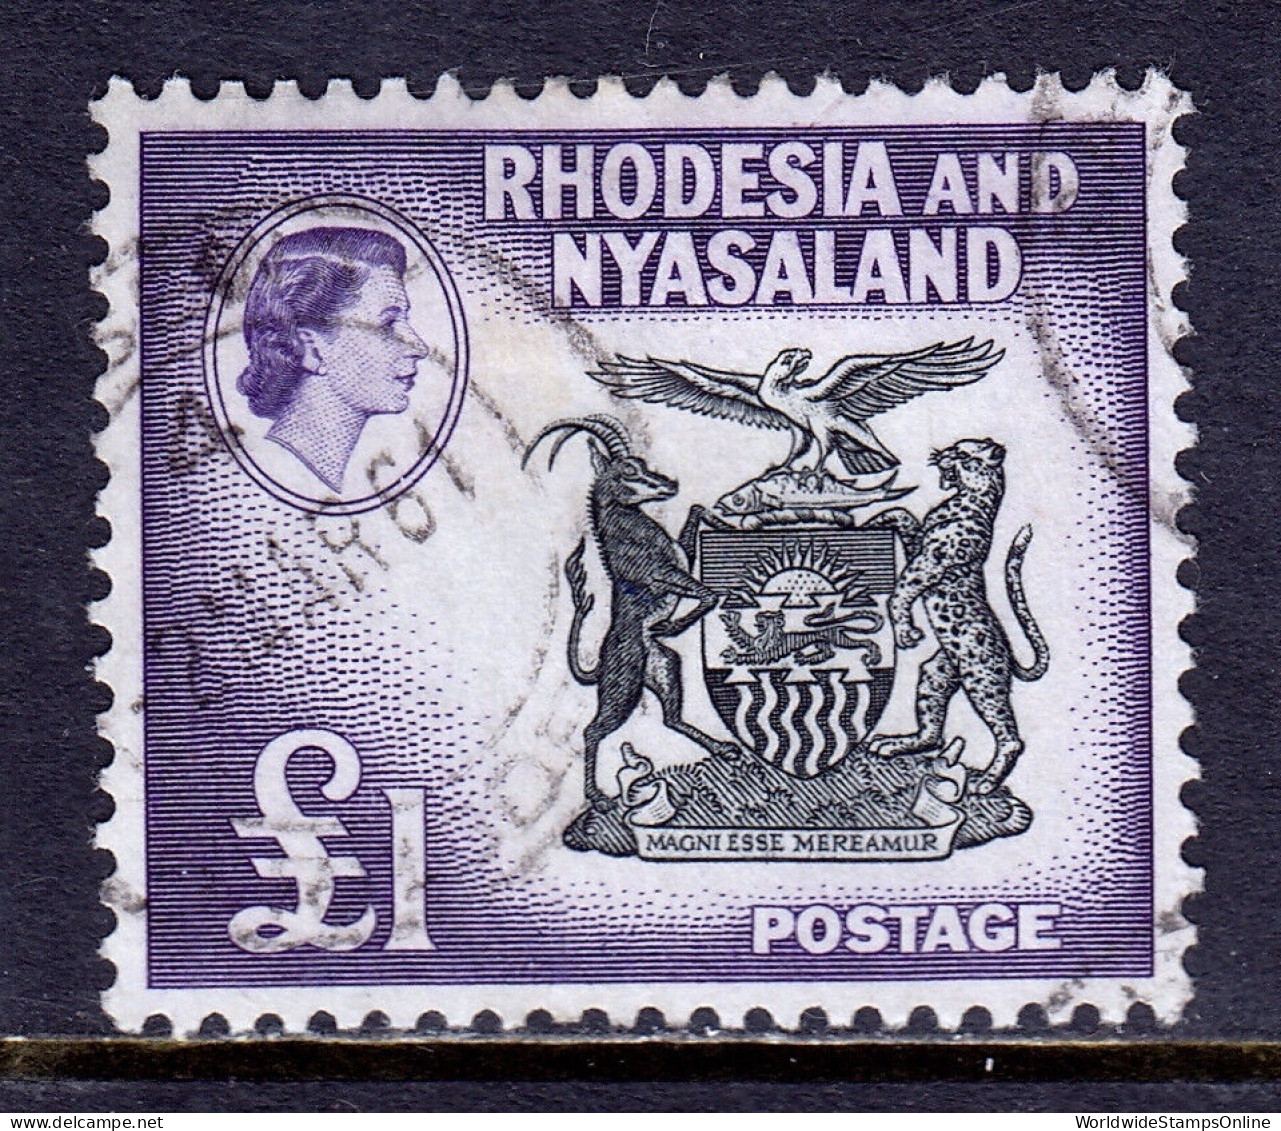 RHODESIA & NYASALAND — SCOTT 171 — 1959 £1 COAT OF ARMS — USED — SCV $67 - Rhodesië & Nyasaland (1954-1963)